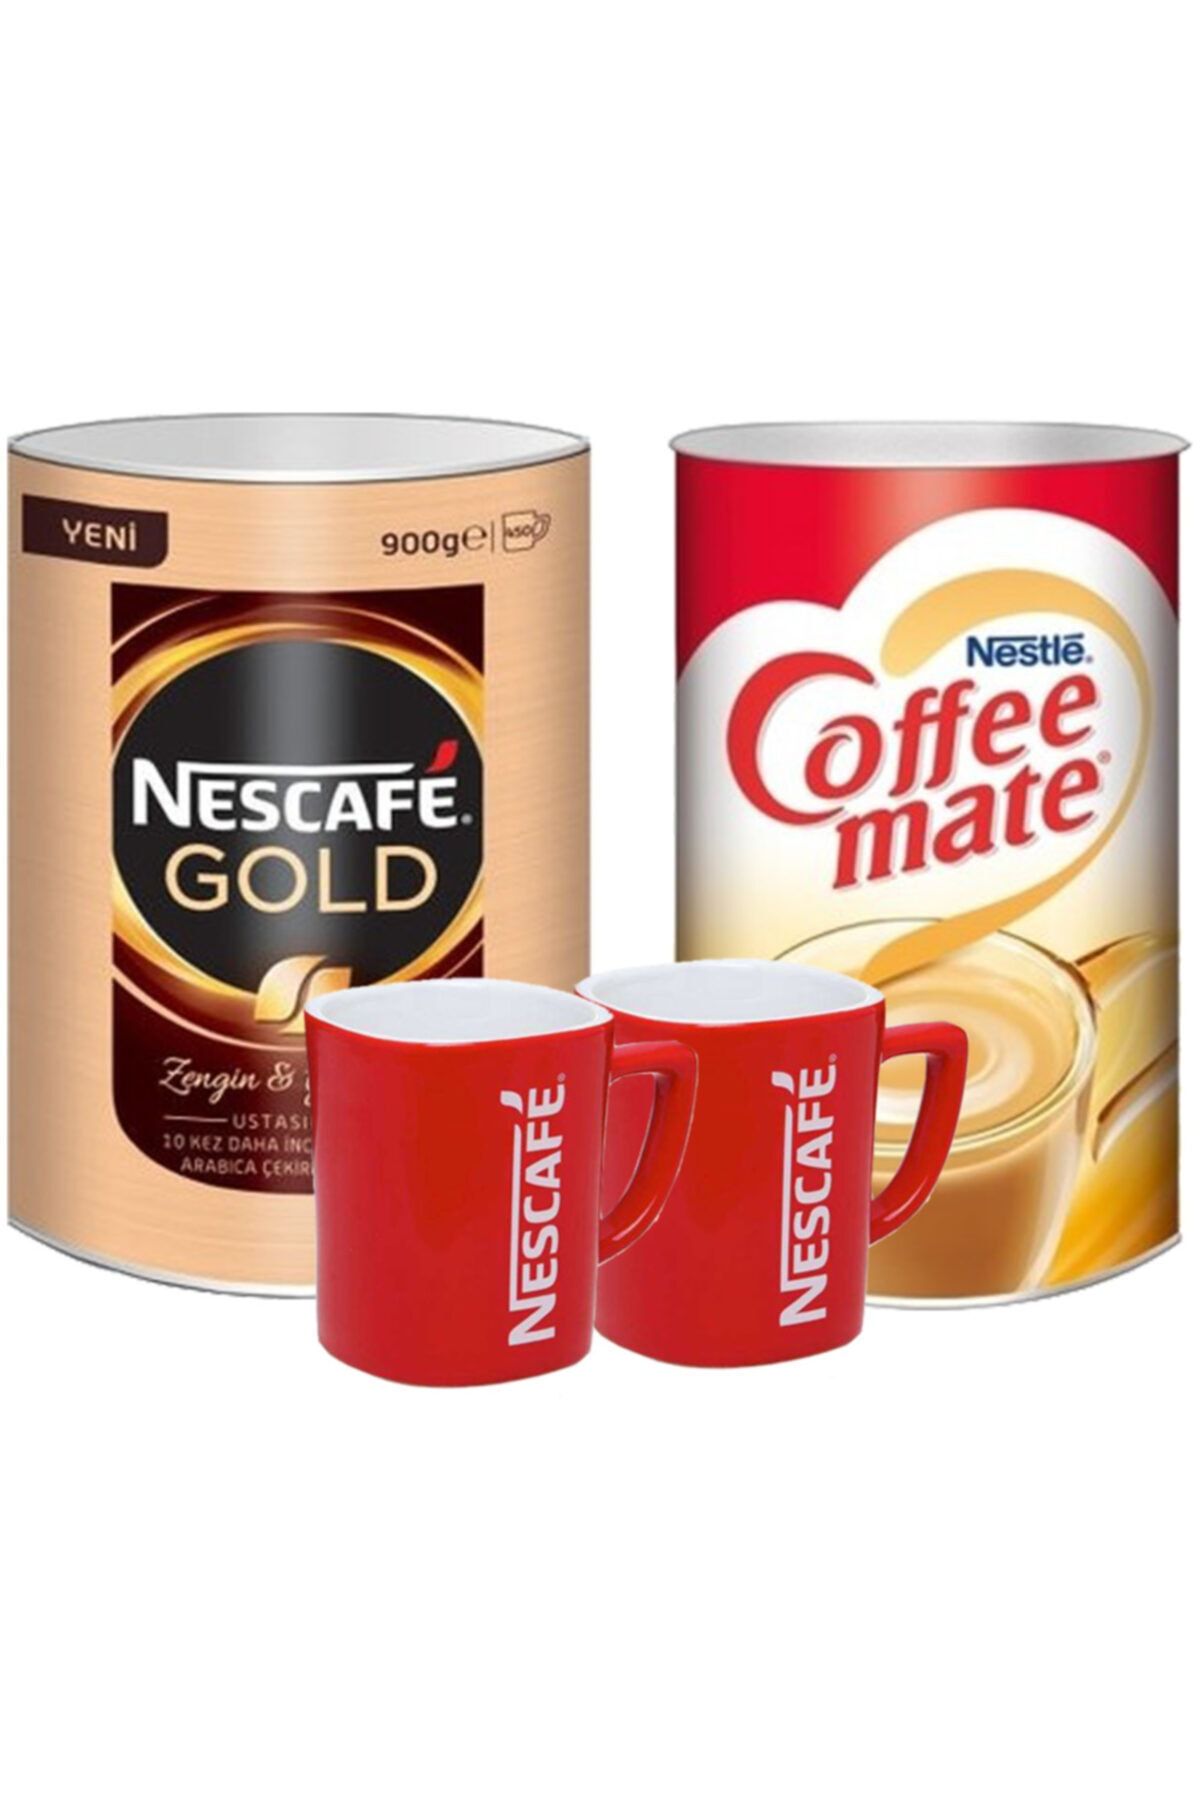 Nescafe Gold Granül Kahve 900 Gr  Coffee Mate 2 Kg  Kupa Bardak 2'Li